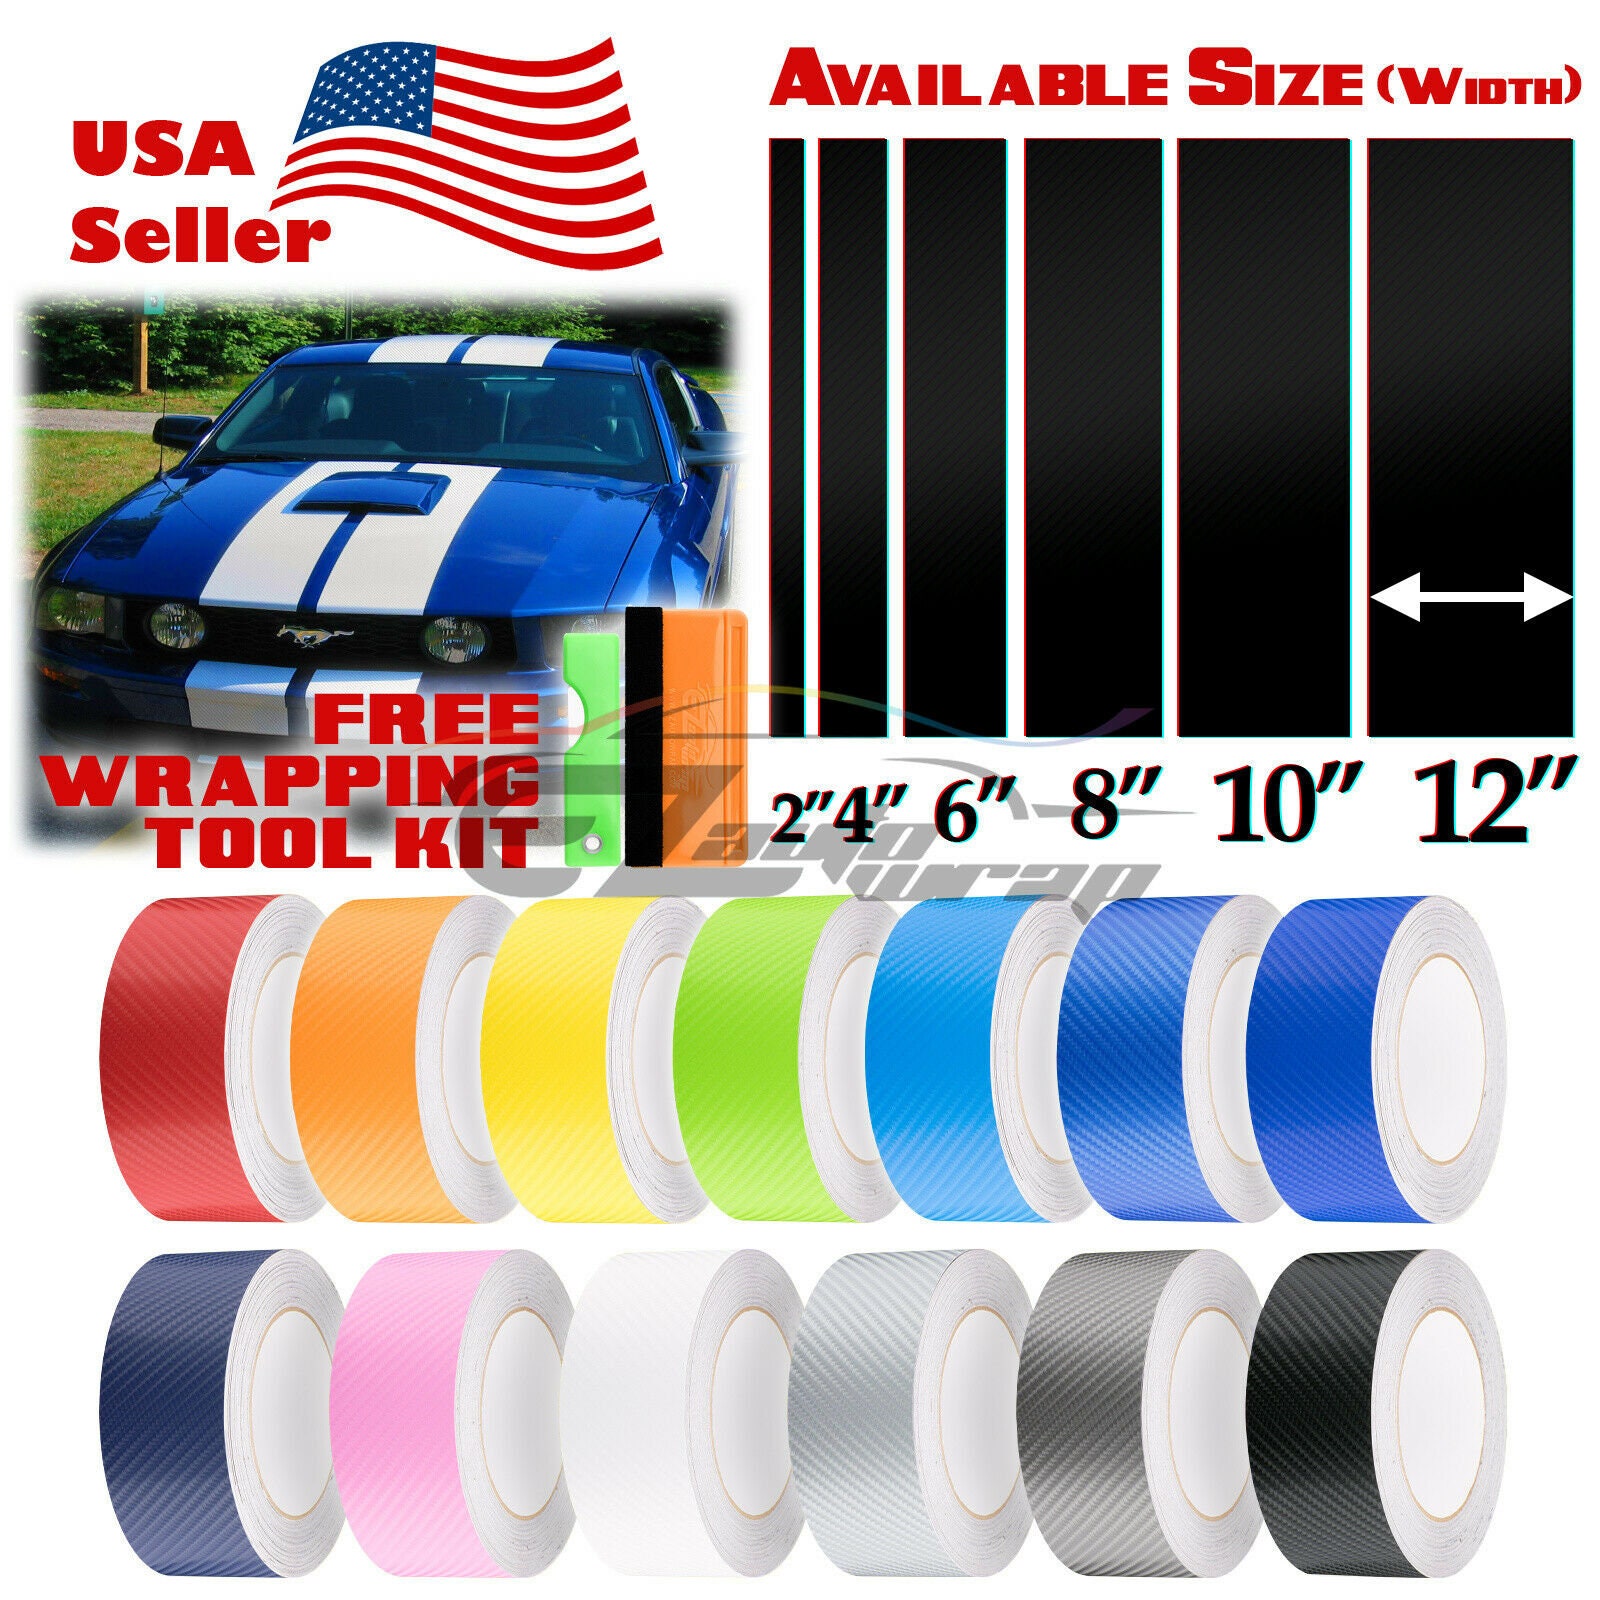 Carbon fiber racing stripes vinyl wrap 